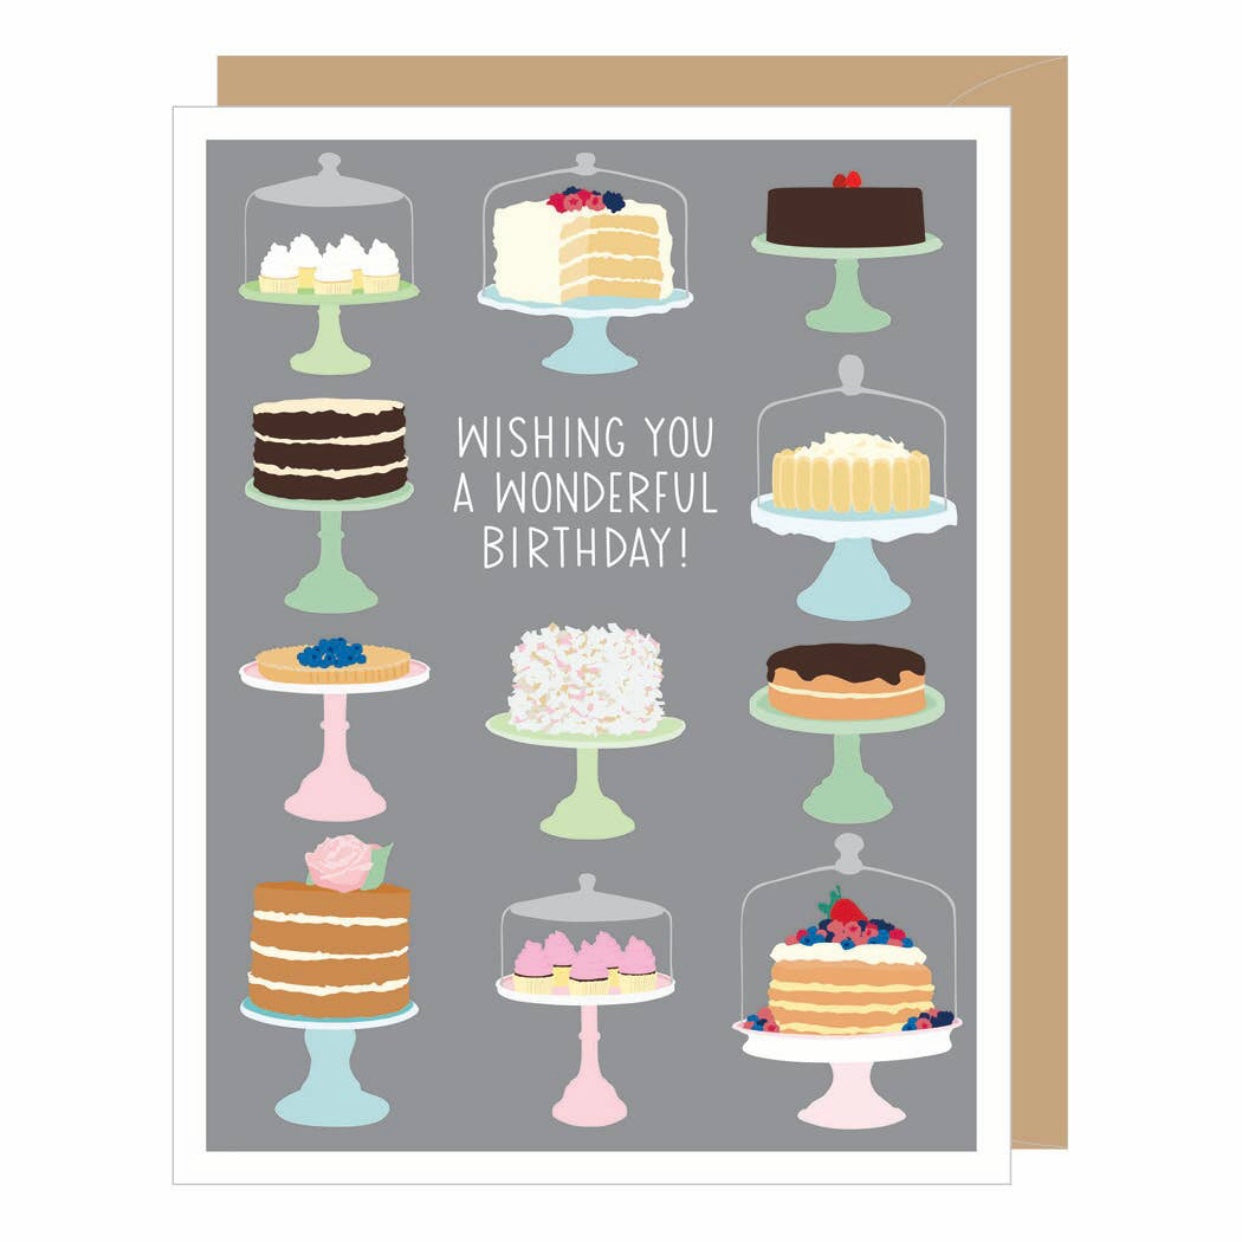 Wishing you a wonderful birthday greeting card